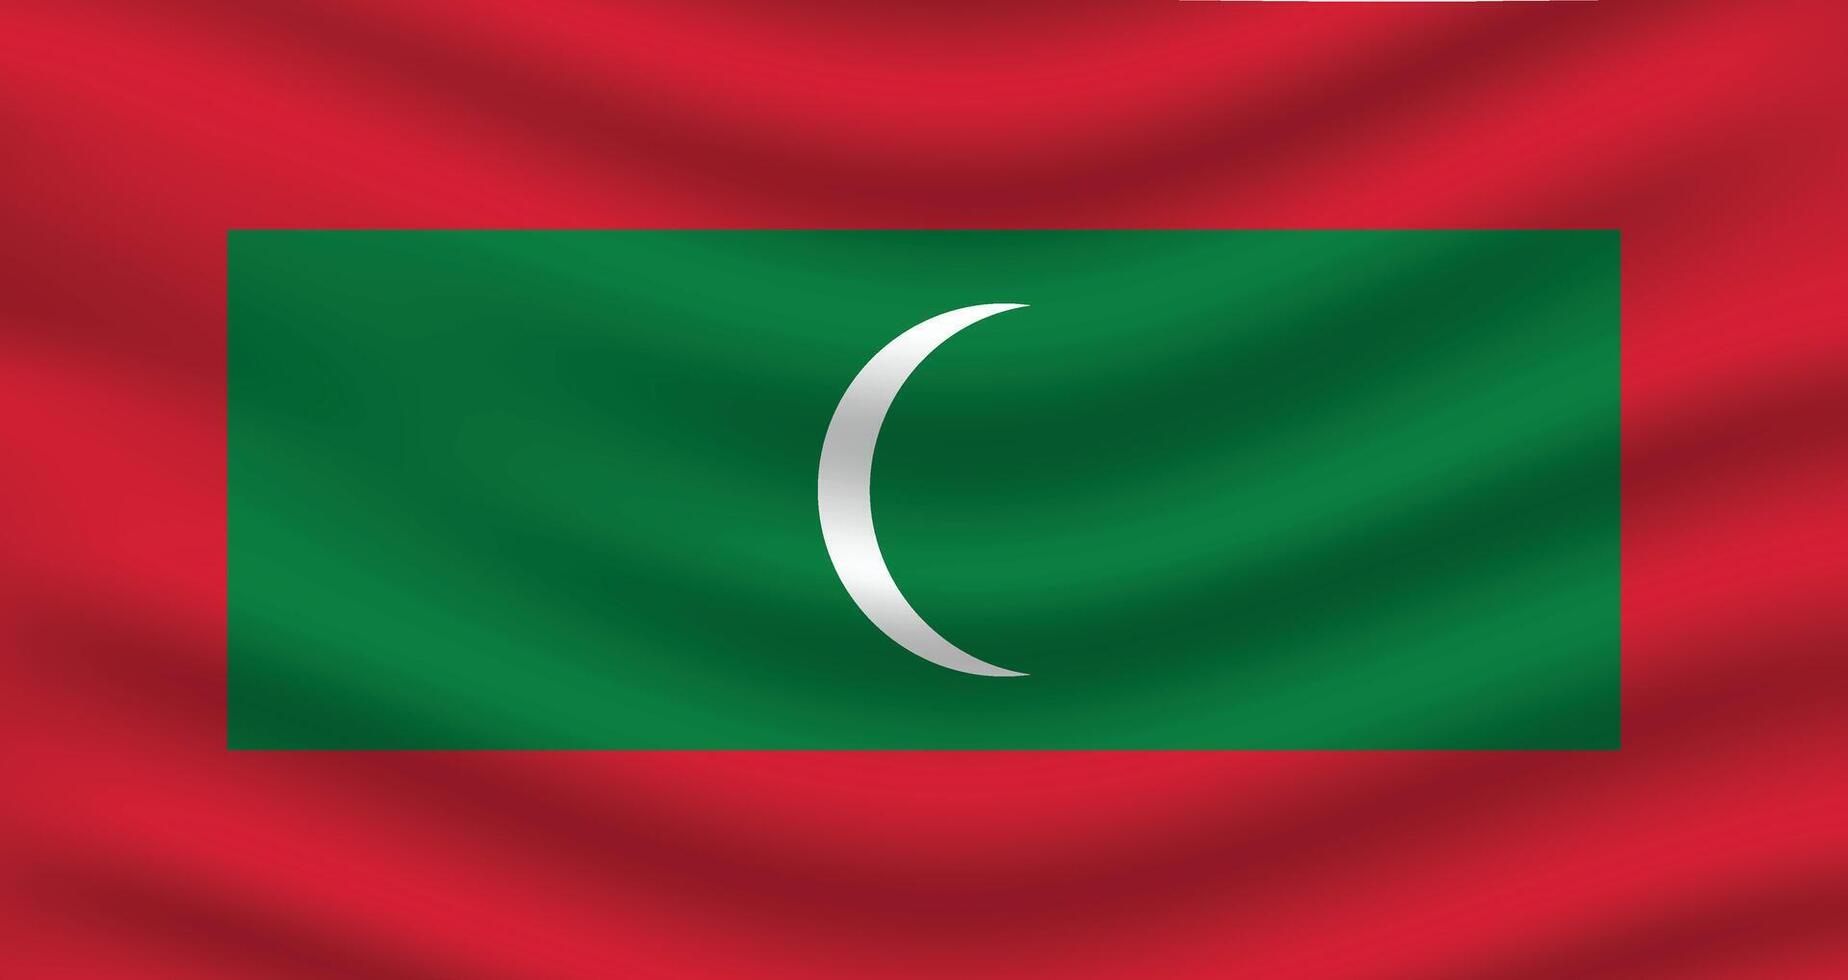 vlak illustratie van de Maldiven vlag. Maldiven nationaal vlag ontwerp. Maldiven Golf vlag. vector